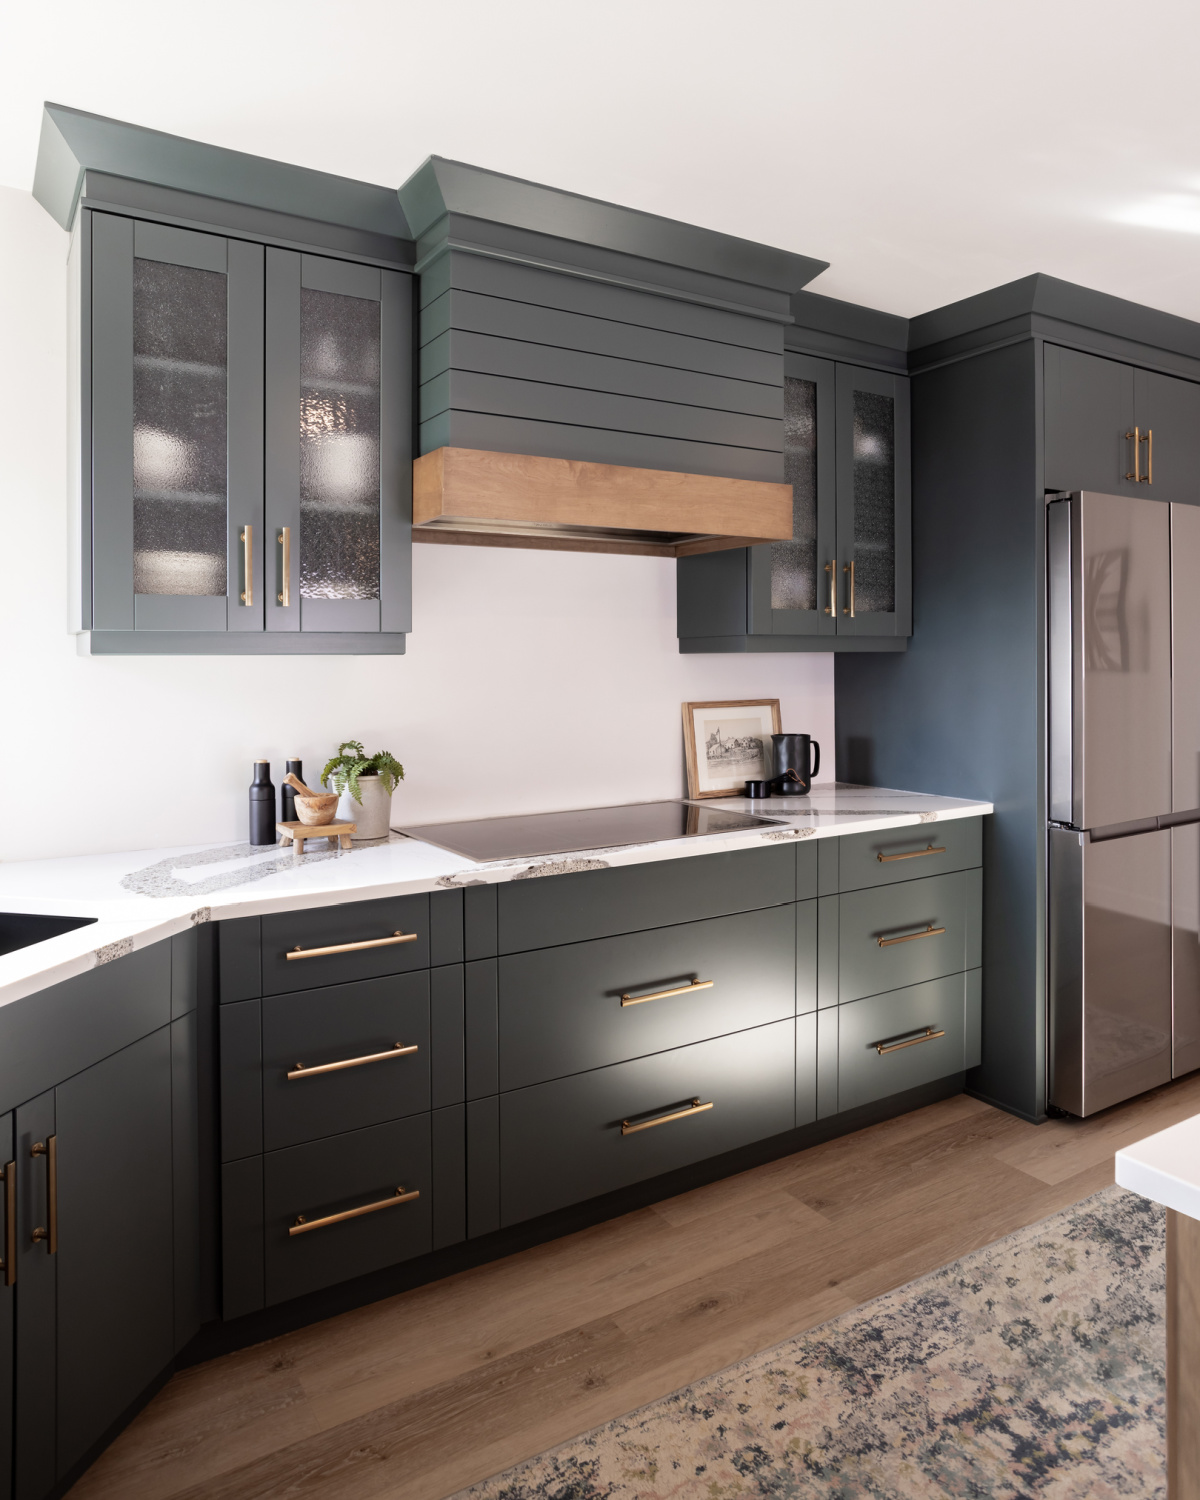 An elegant grey-green color was chosen for this modern farmhouse style kitchen.